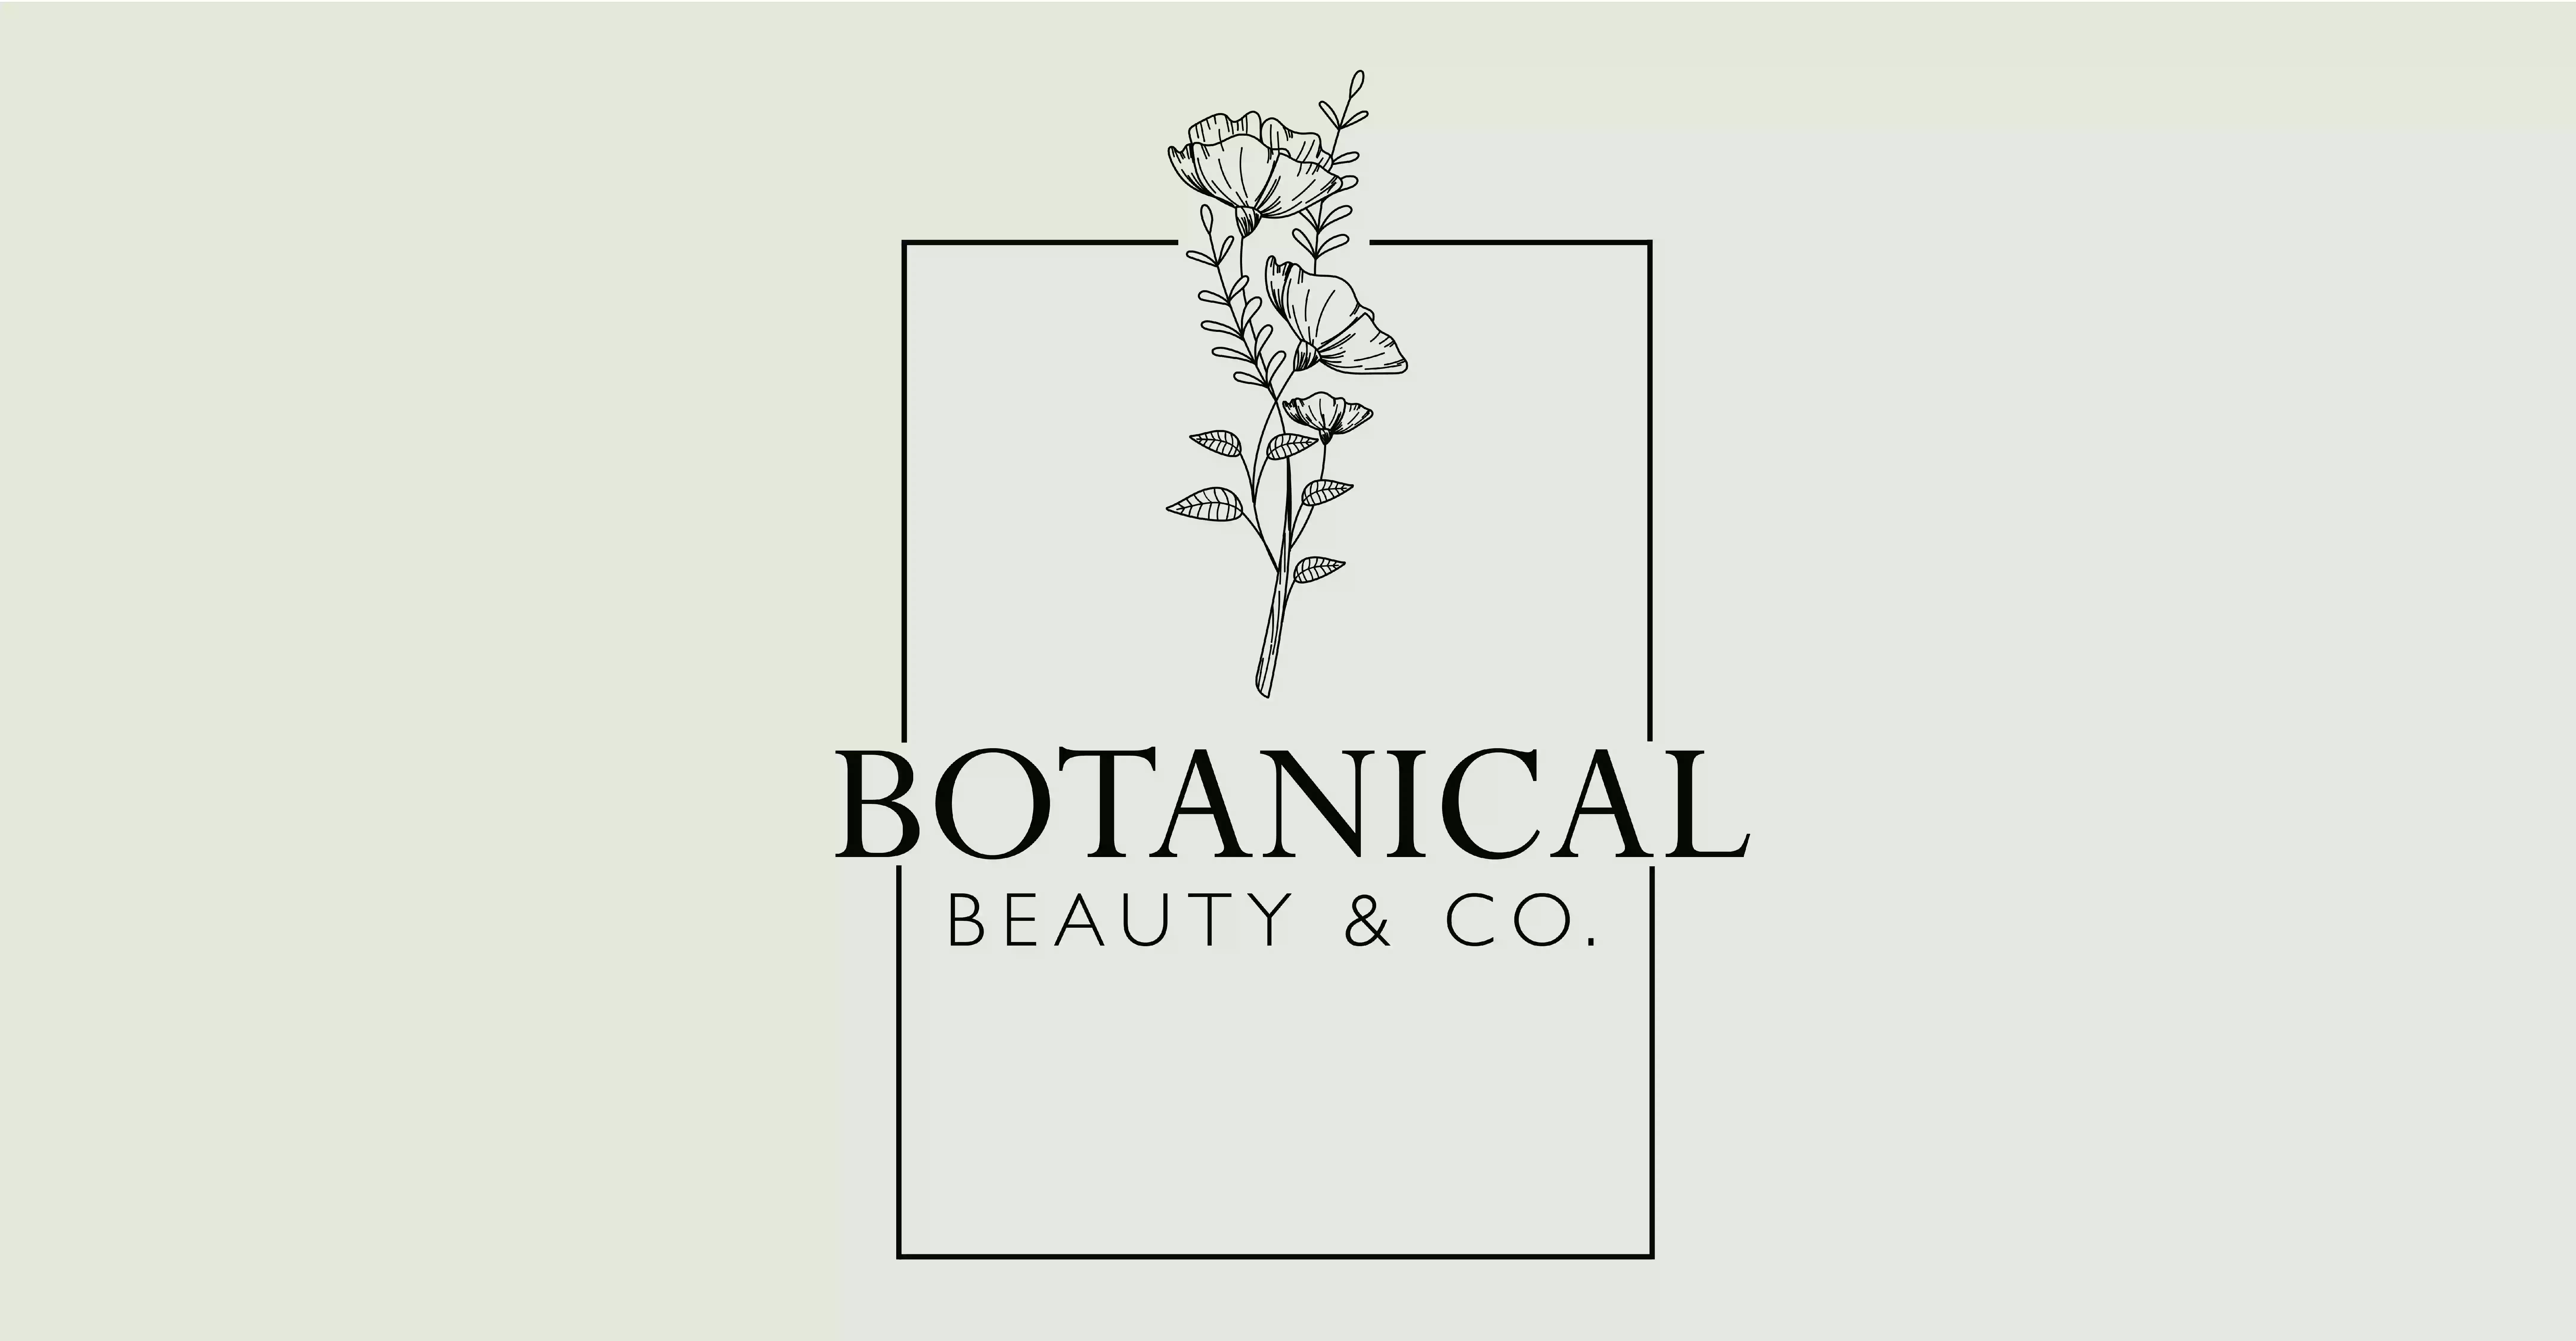 Botanical Beauty & Co.